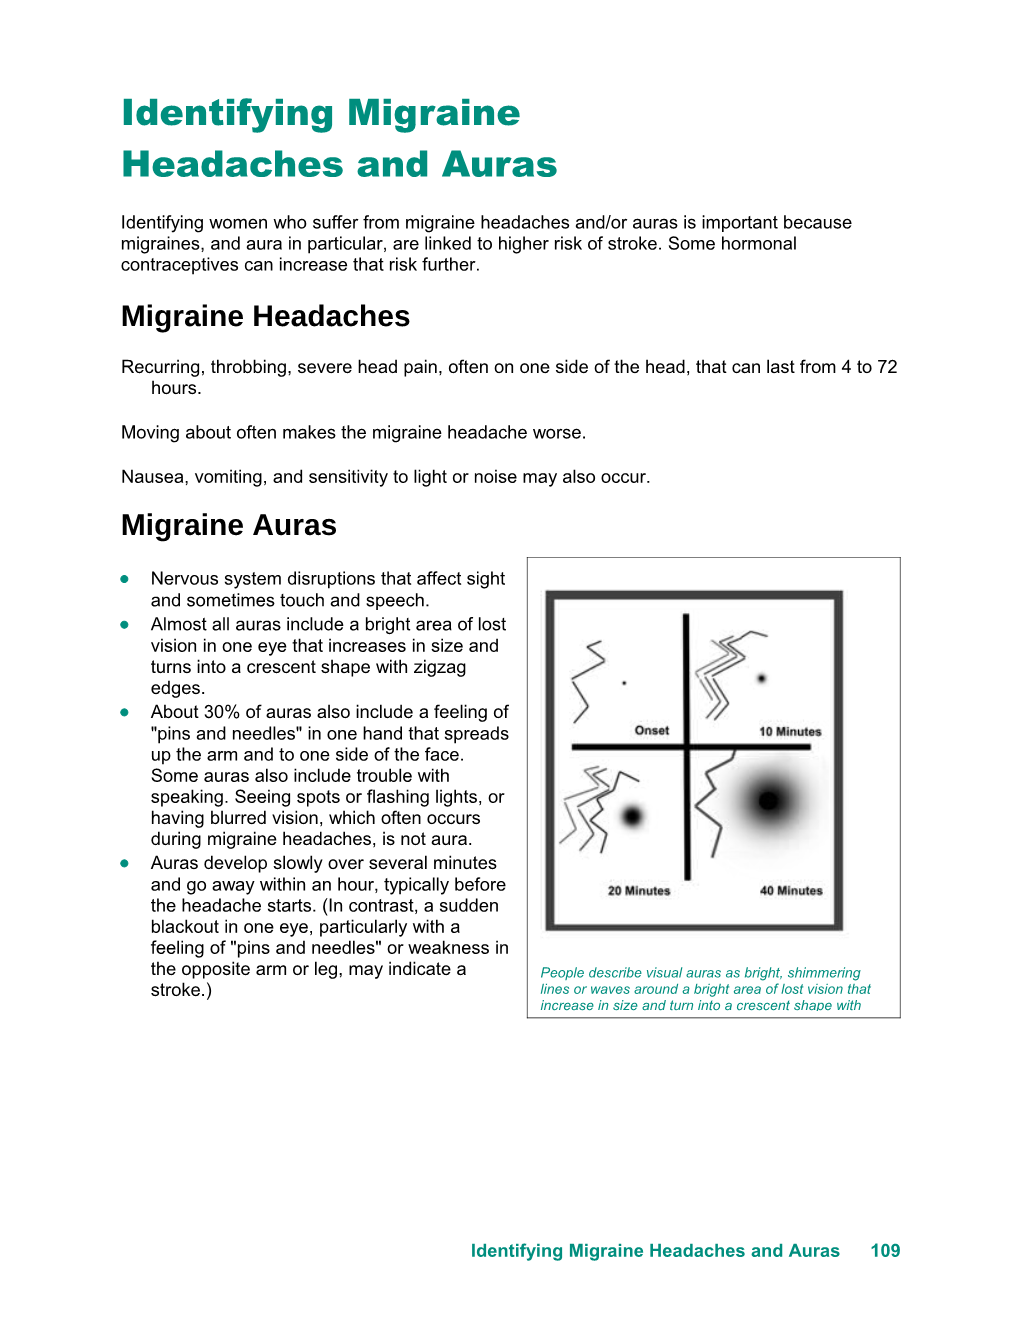 Identifying Migraine Headaches and Auras